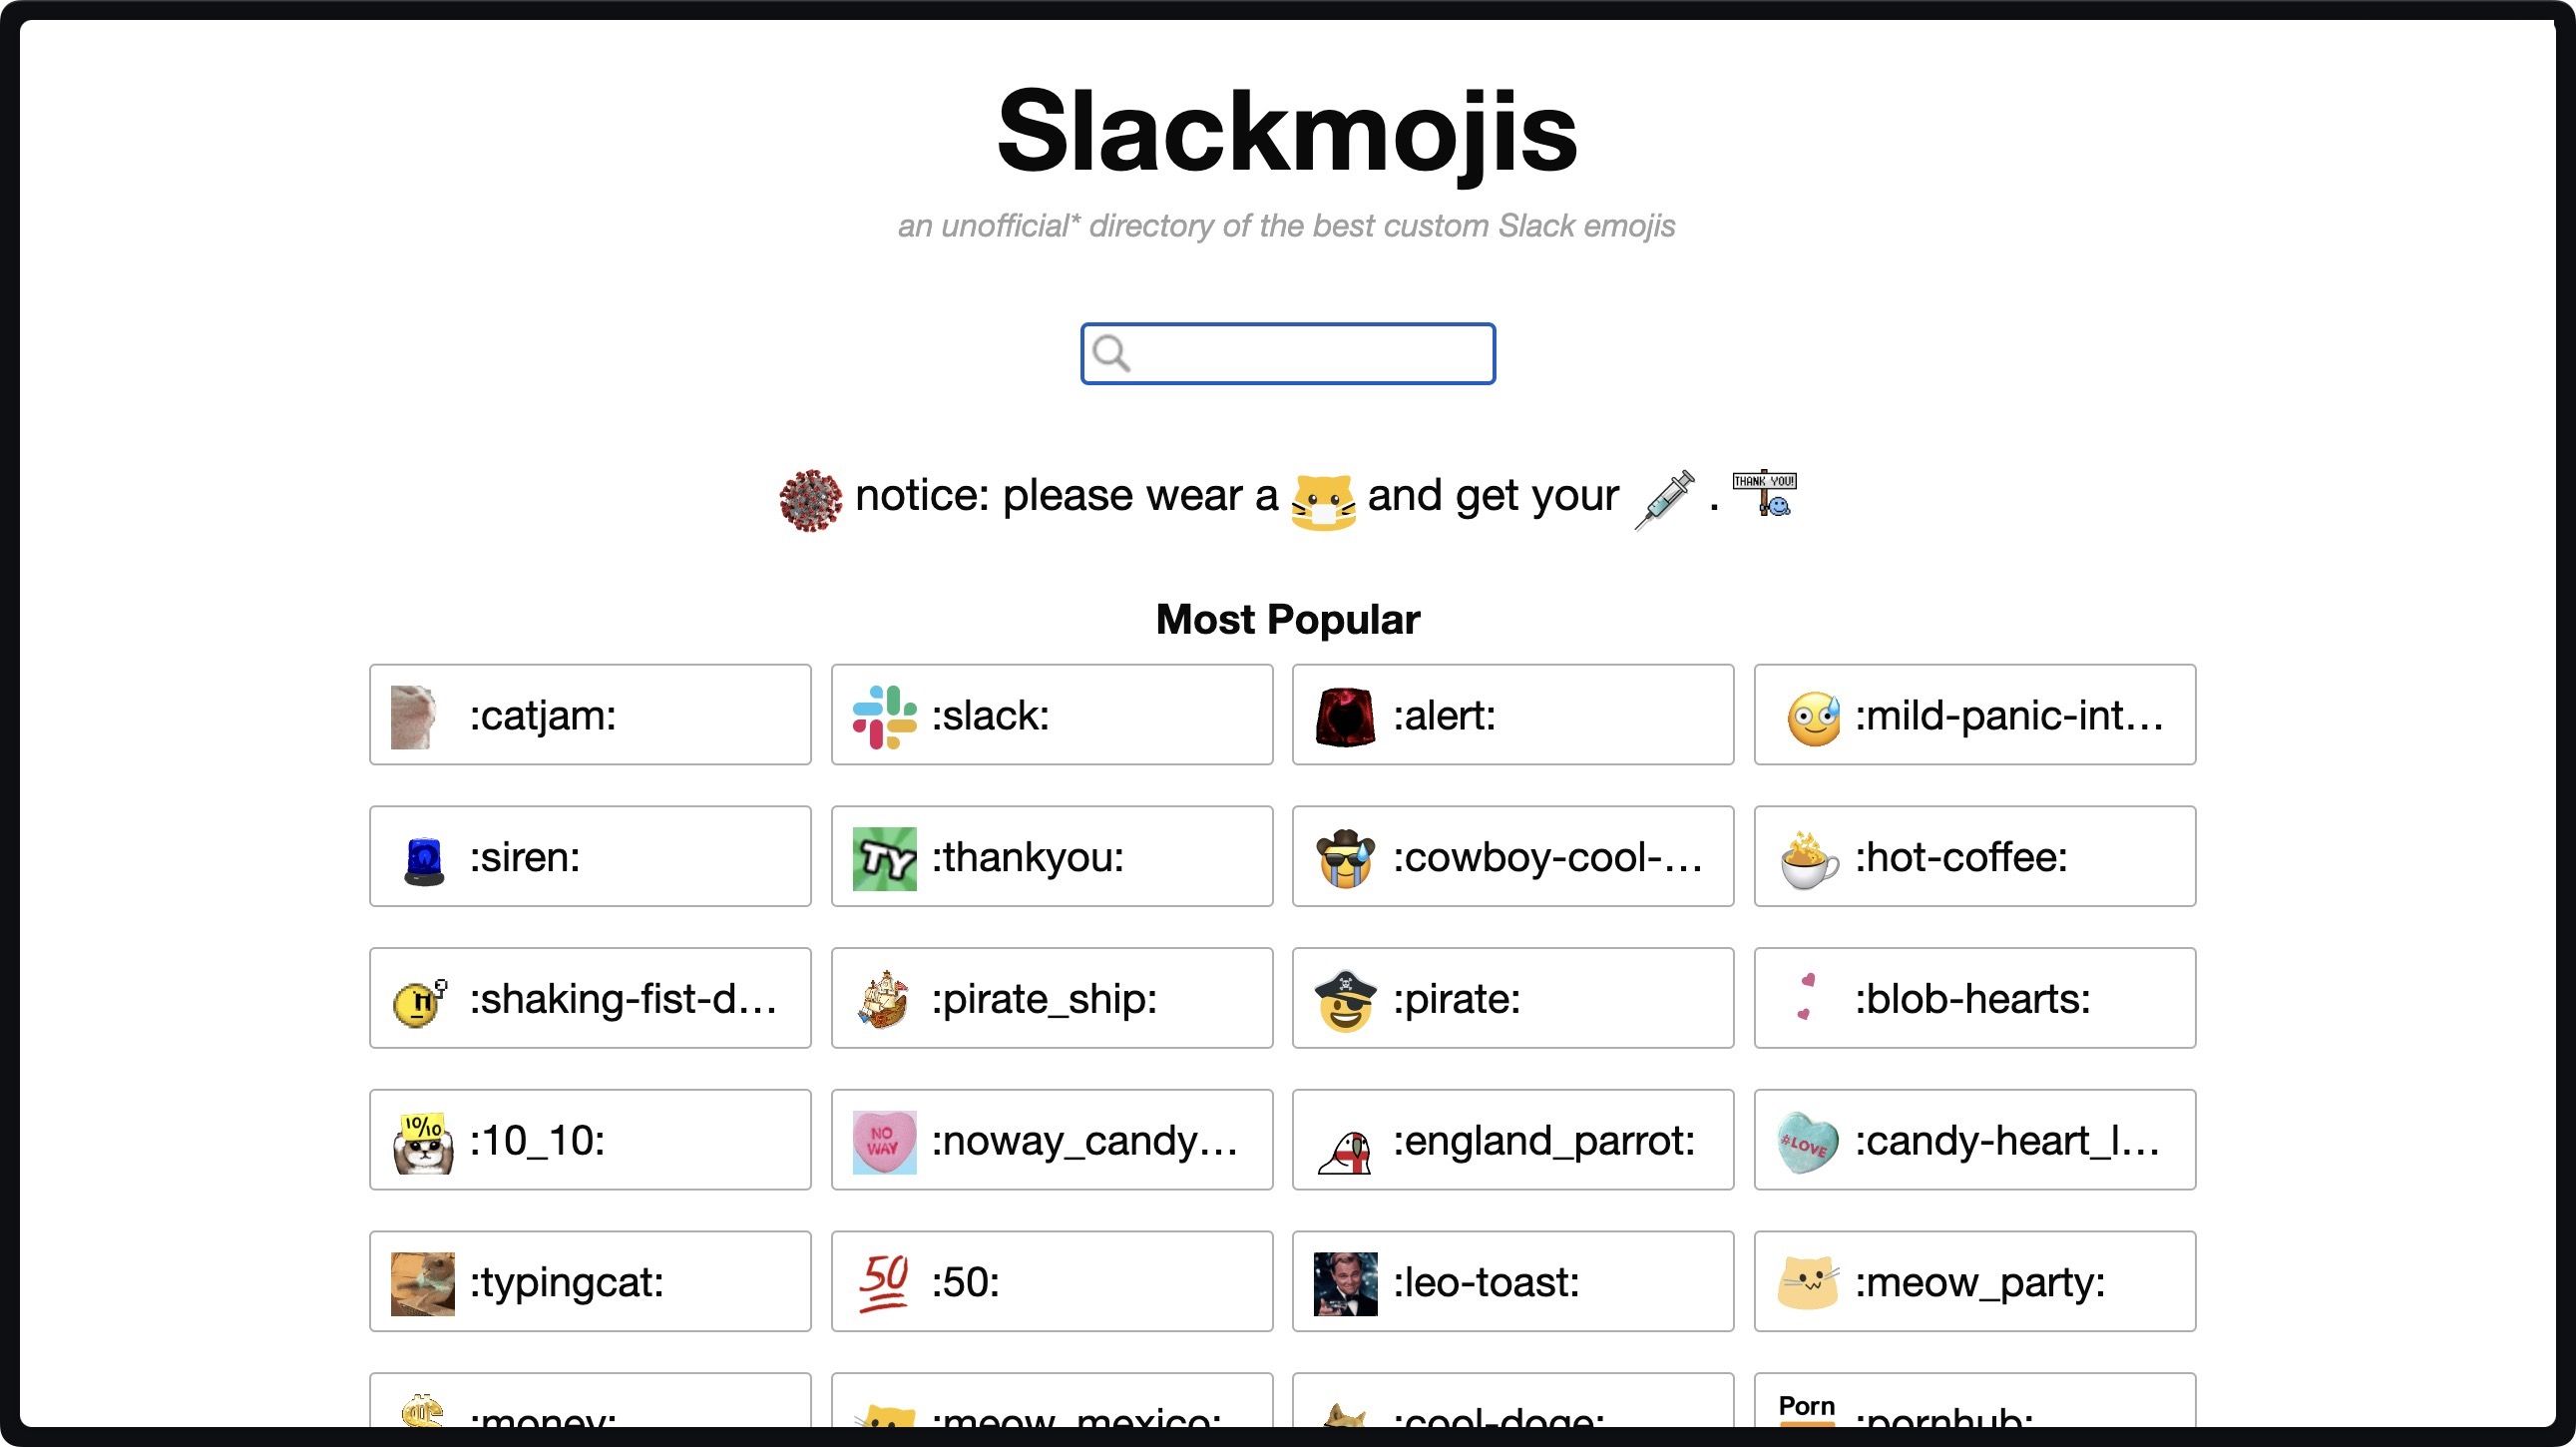 Slackmojis Home page screenshot